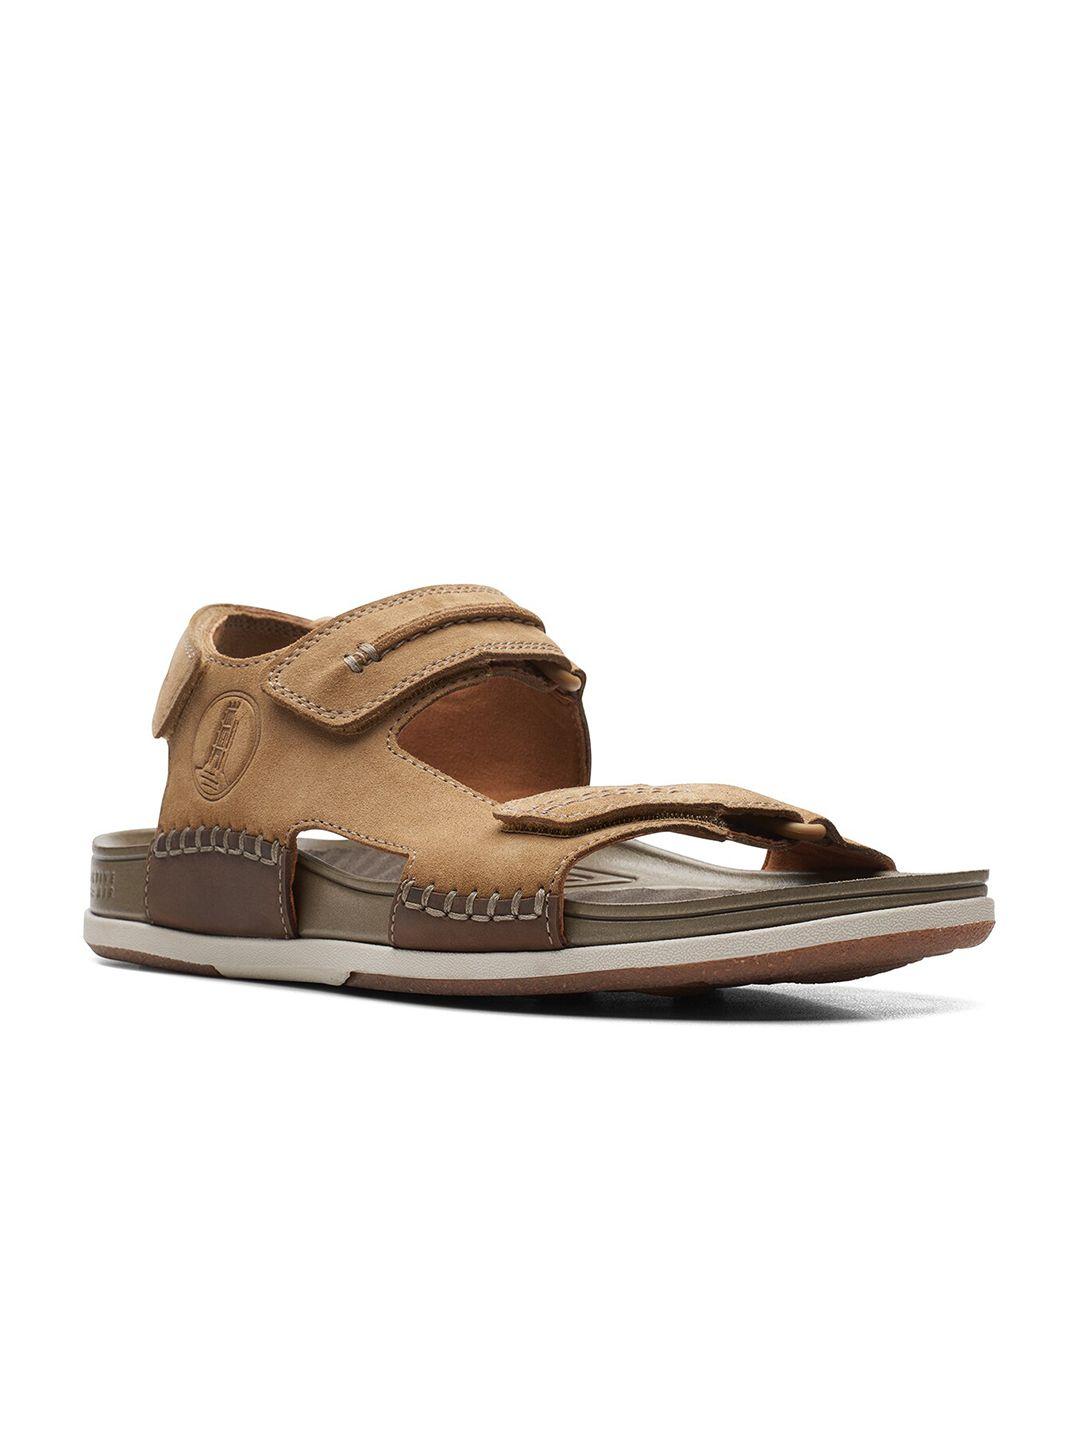 clarks-men-leather-sports-sandals